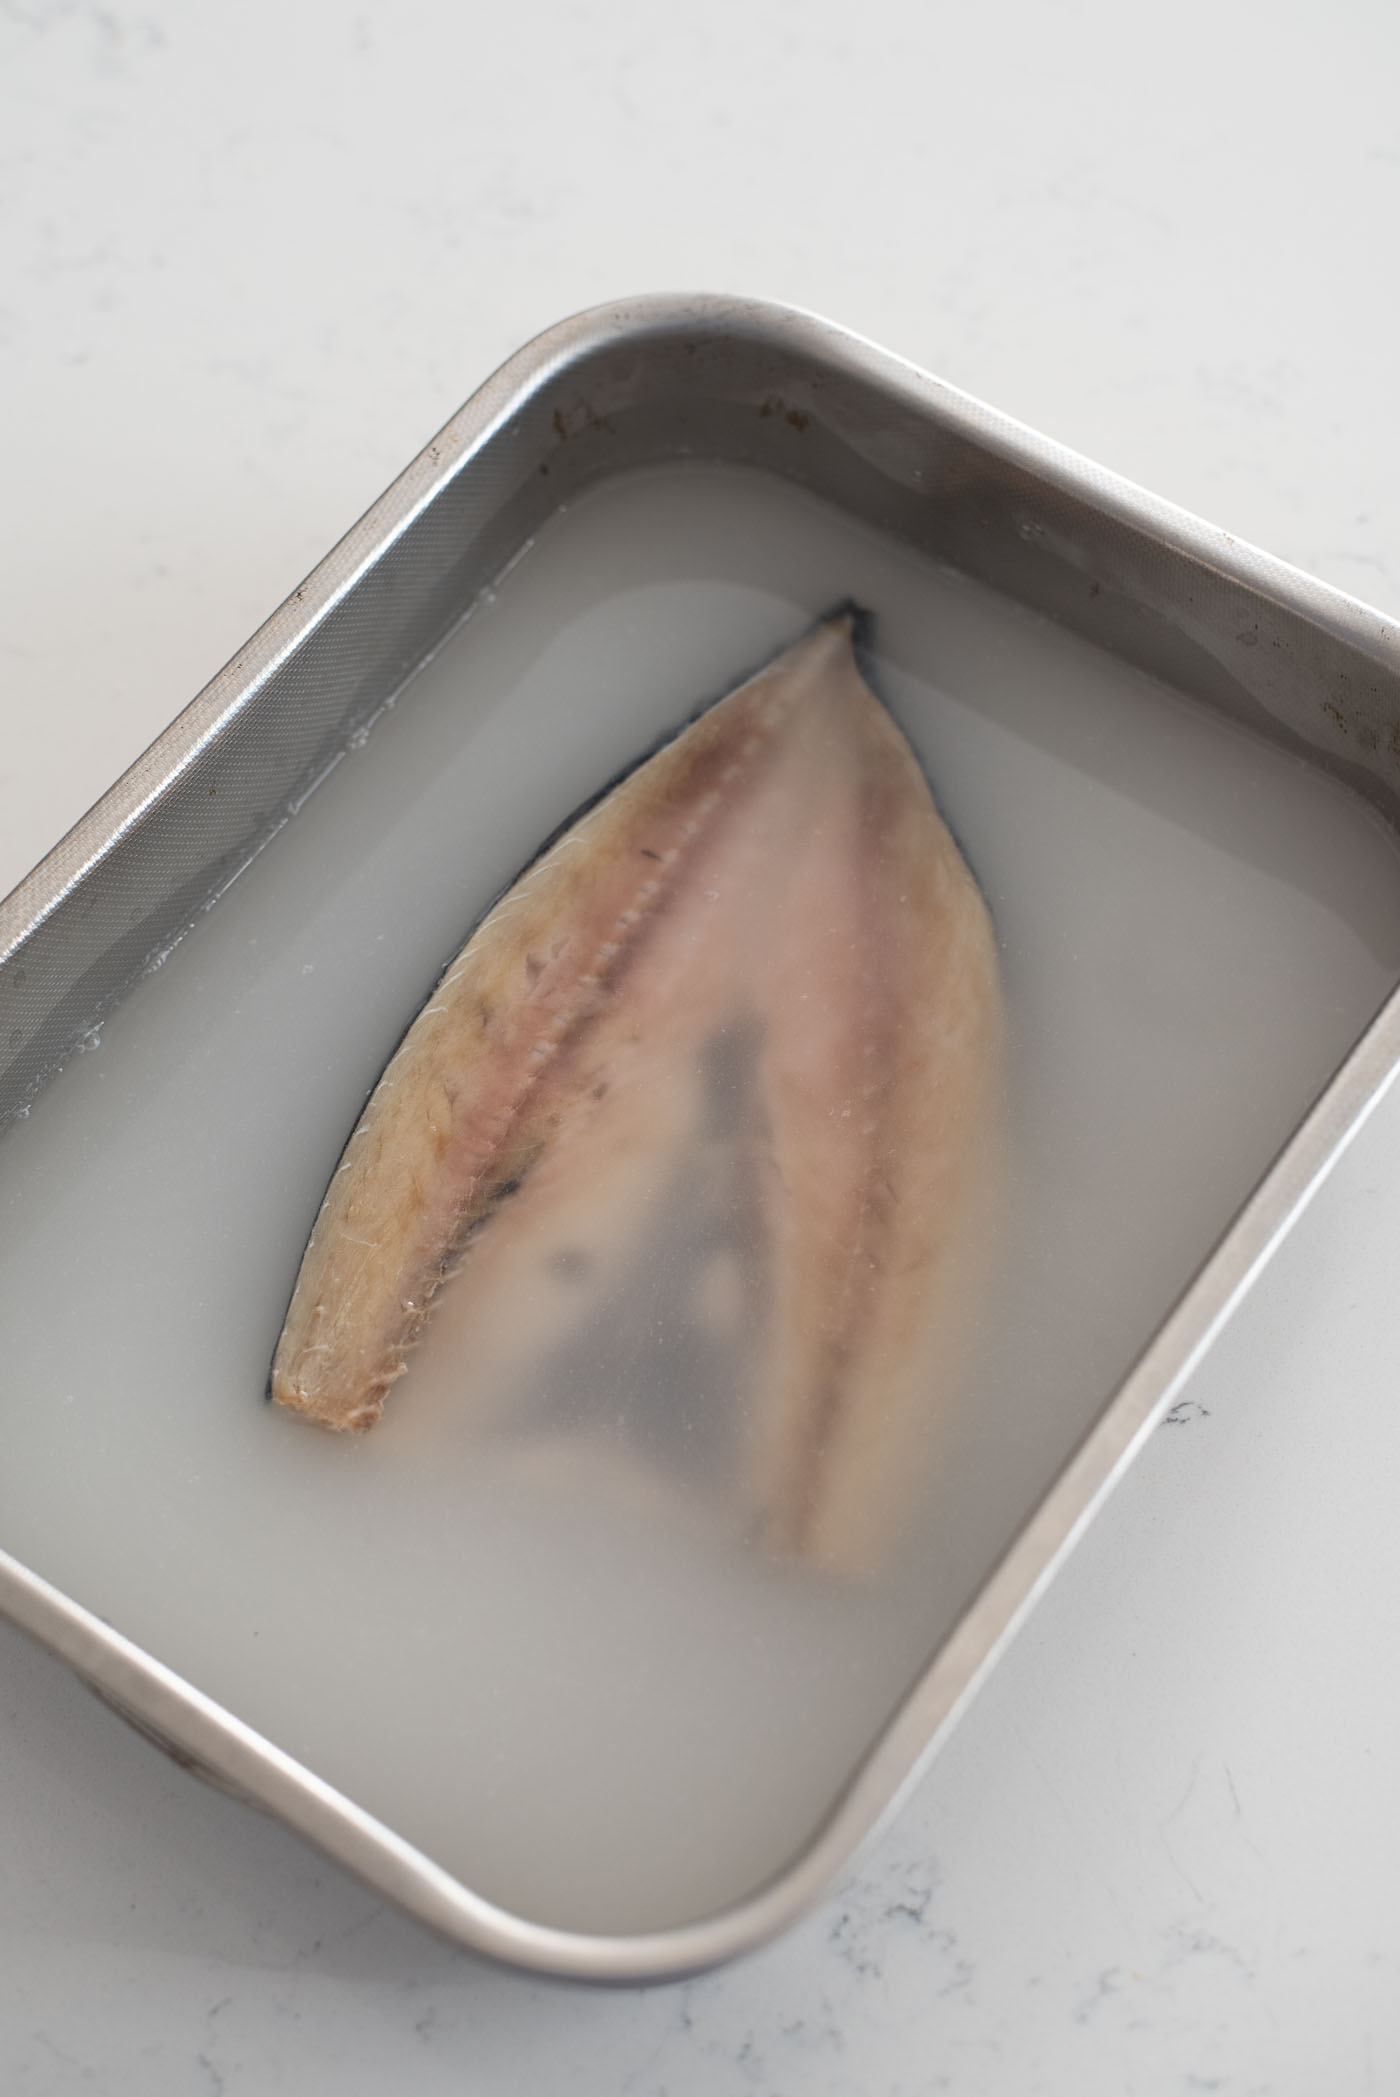 Salted mackerel fish soaking in a rice water.